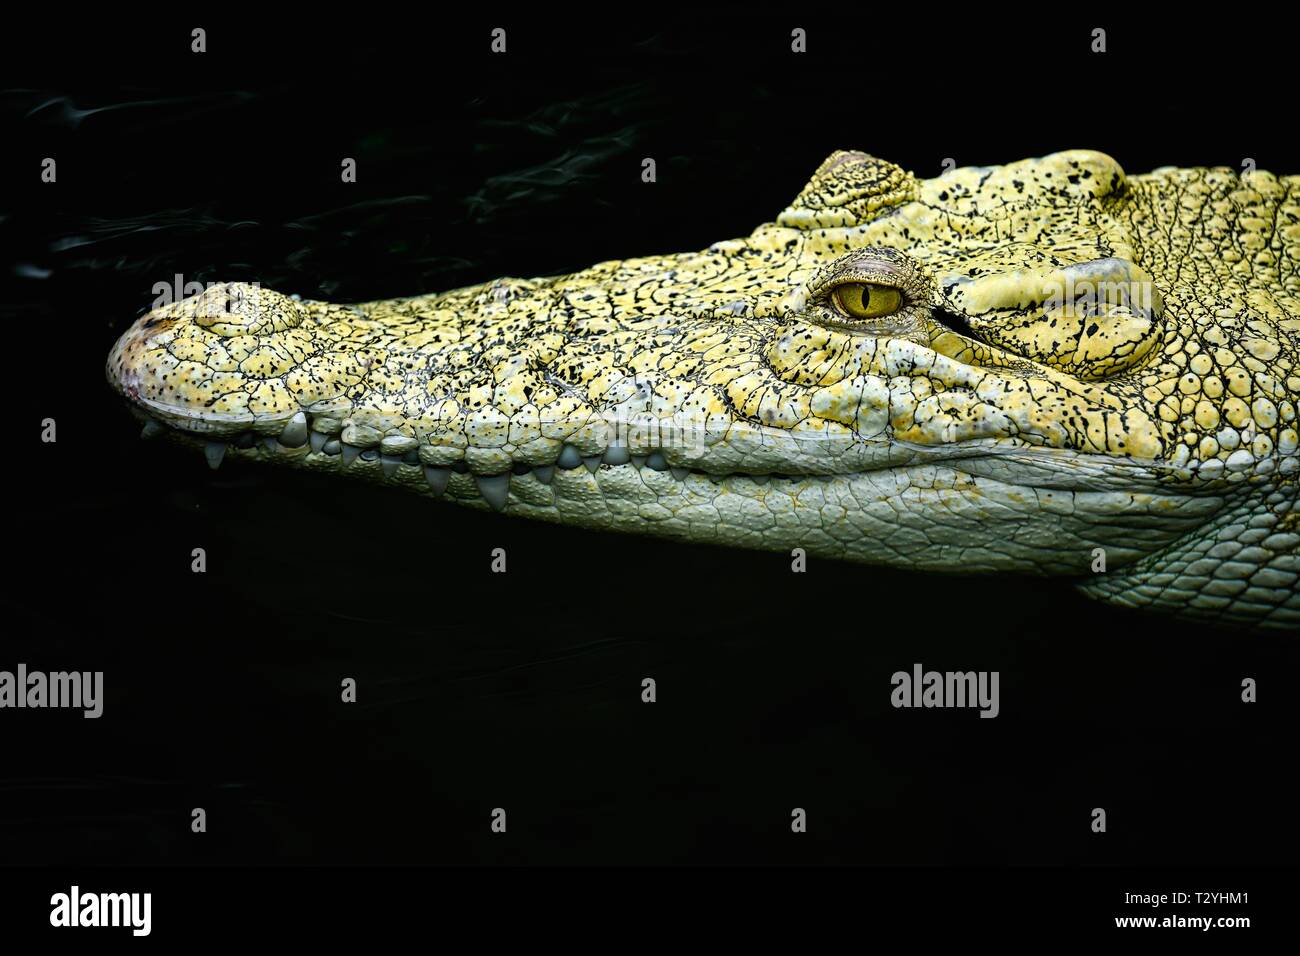 El cocodrilo de agua salada (Crocodylus porosus), retrato animal en agua, Albino, cautiva, Alemania Foto de stock